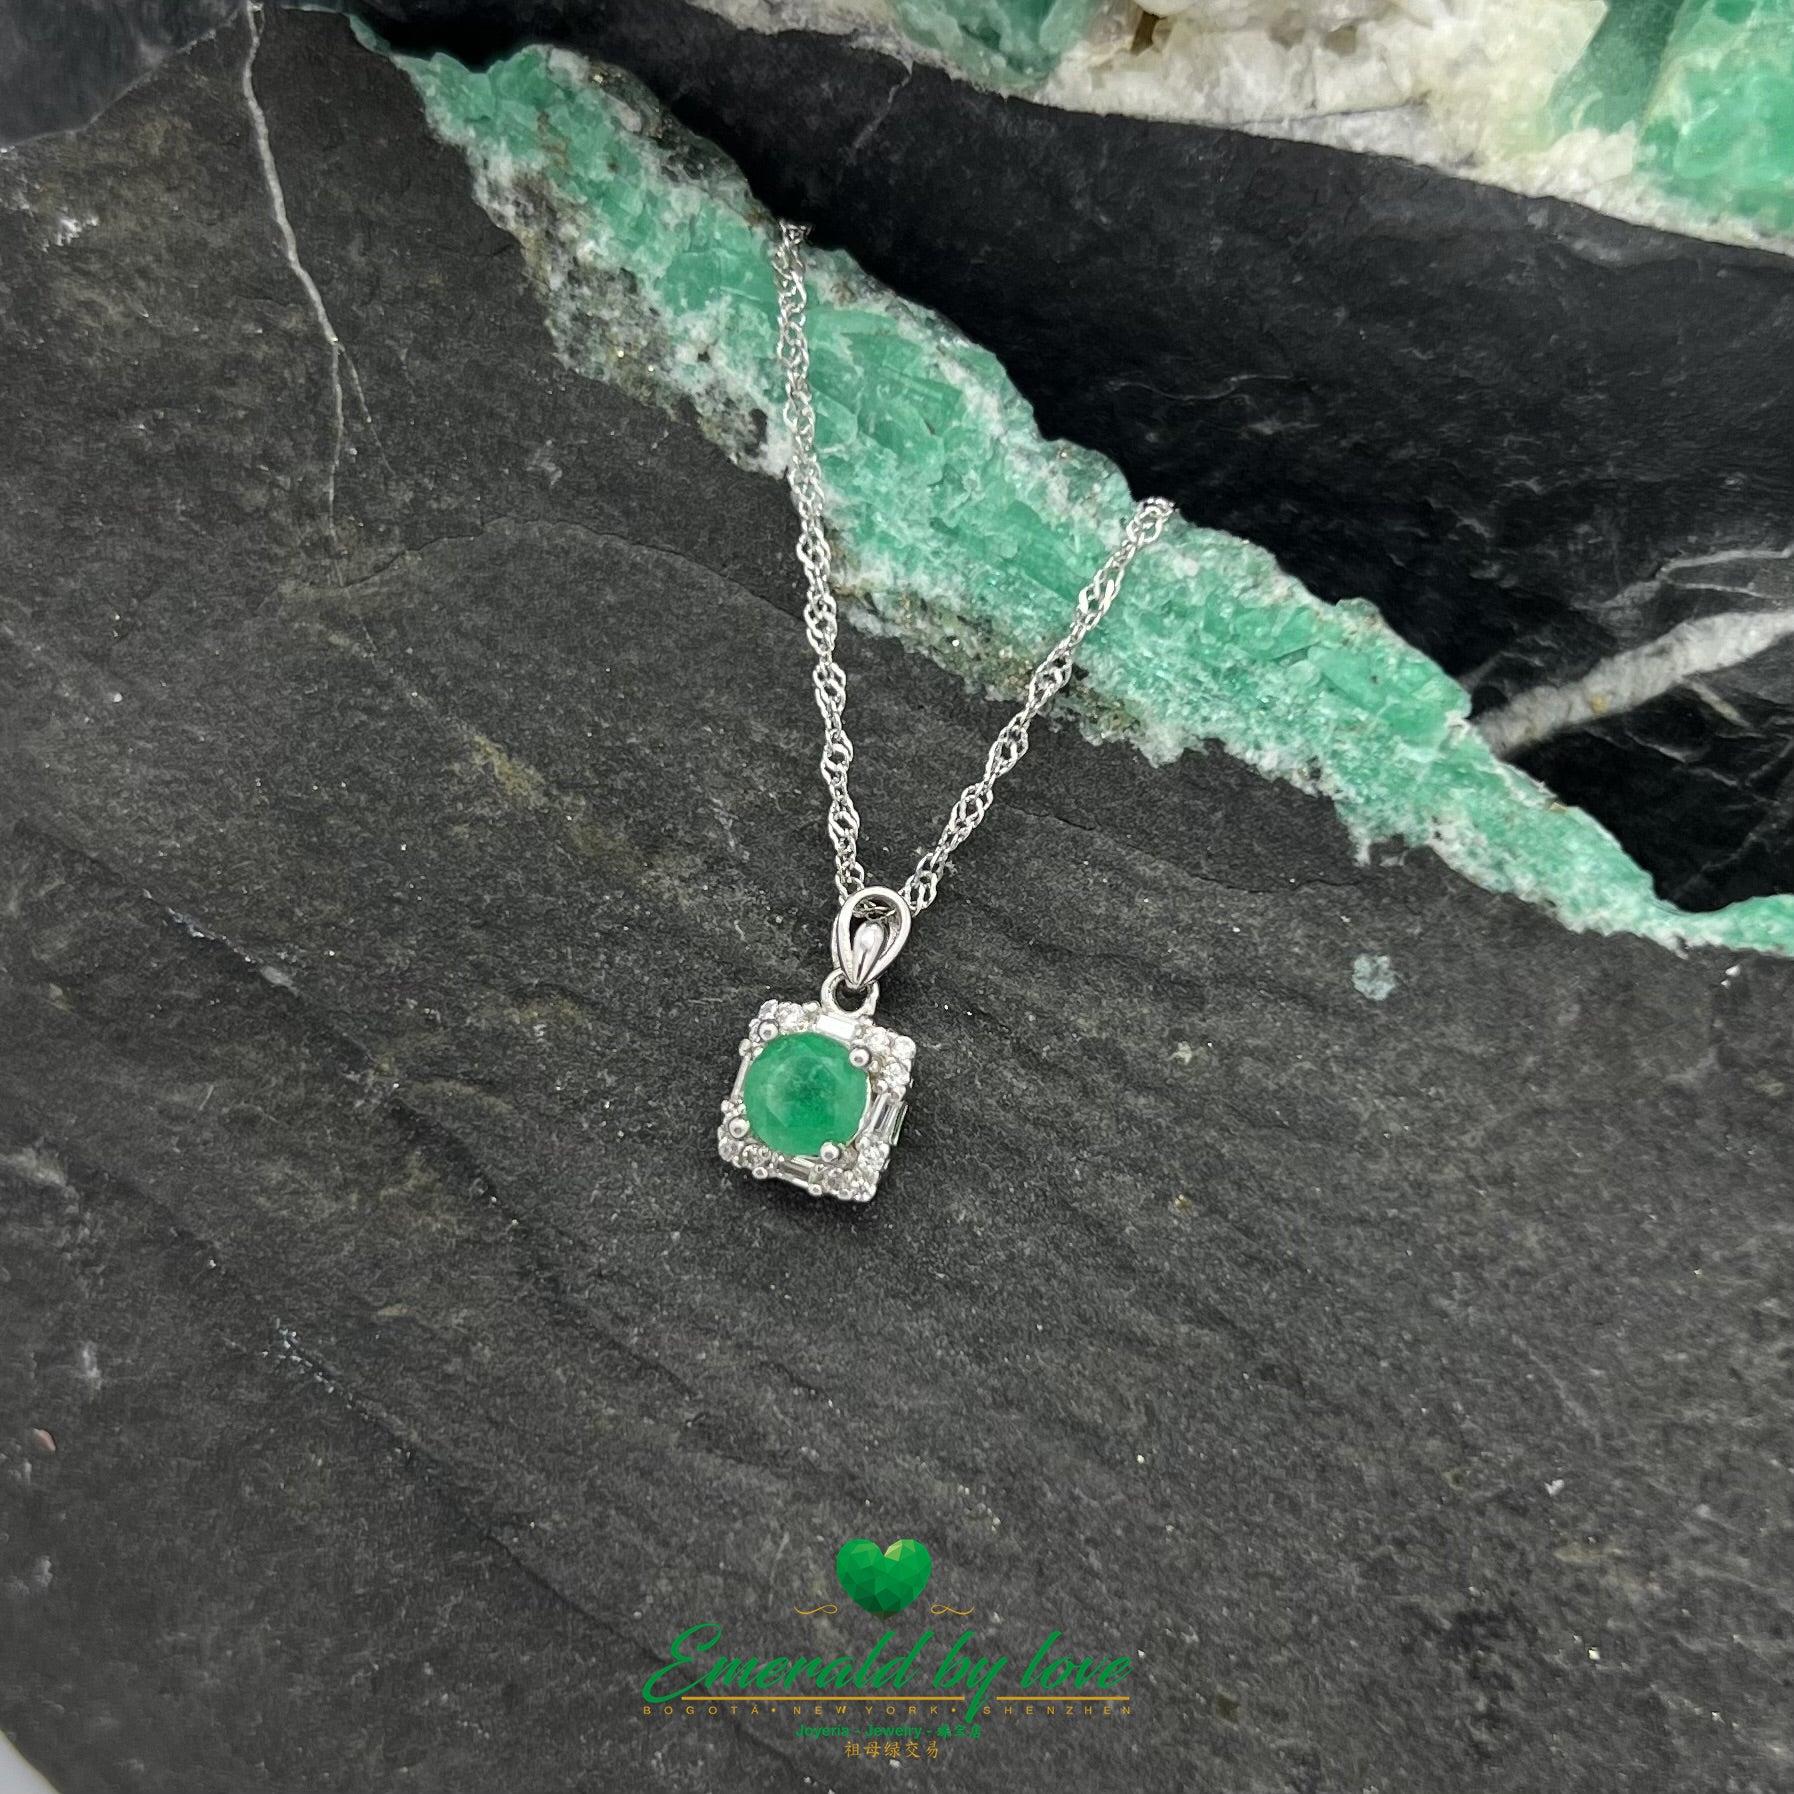 Round Emerald Pendant with Baguette-Cut Cubic Zirconia Surround